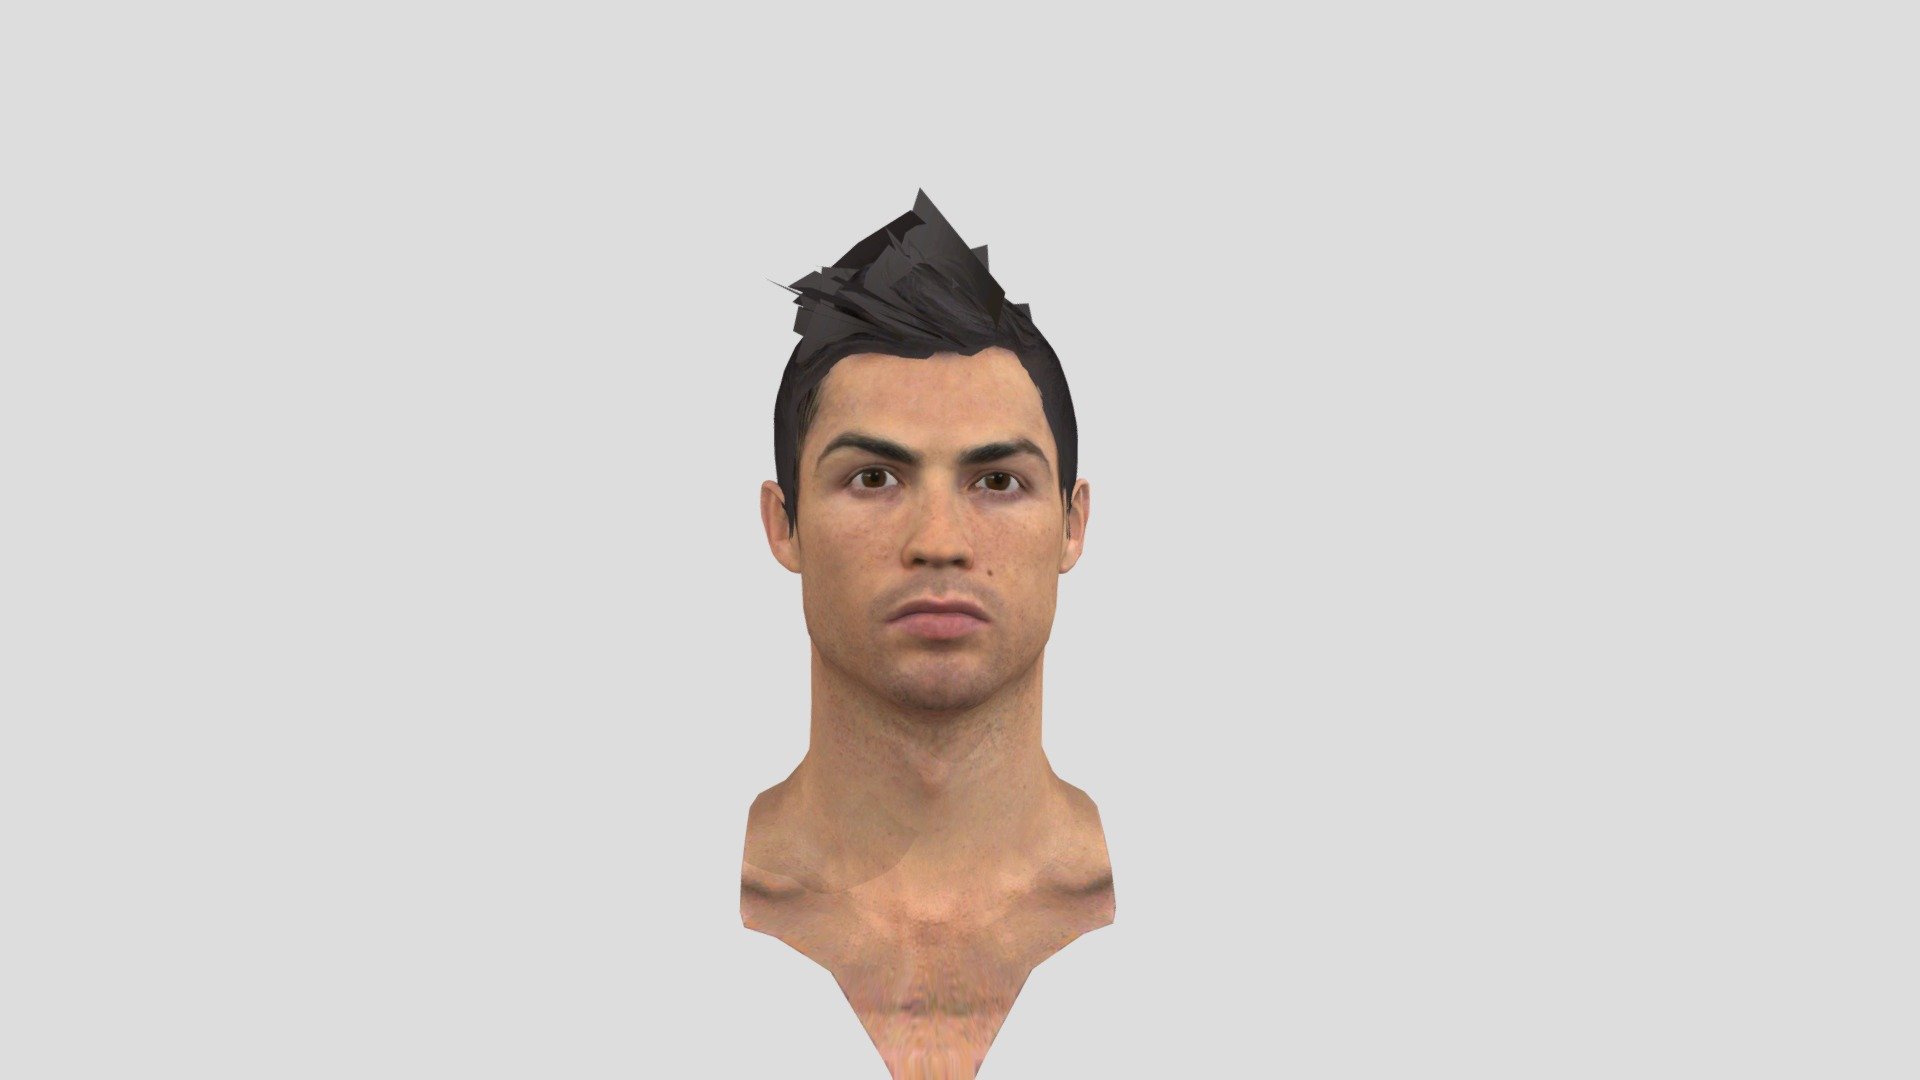 face obj-fbx-texture
buy:https://www.alirezafacemaker.com/classic-teams/face-3d-cristiano-ronaldo - Cristiano Ronaldo - 3D model by alirezafacemaker 3d model